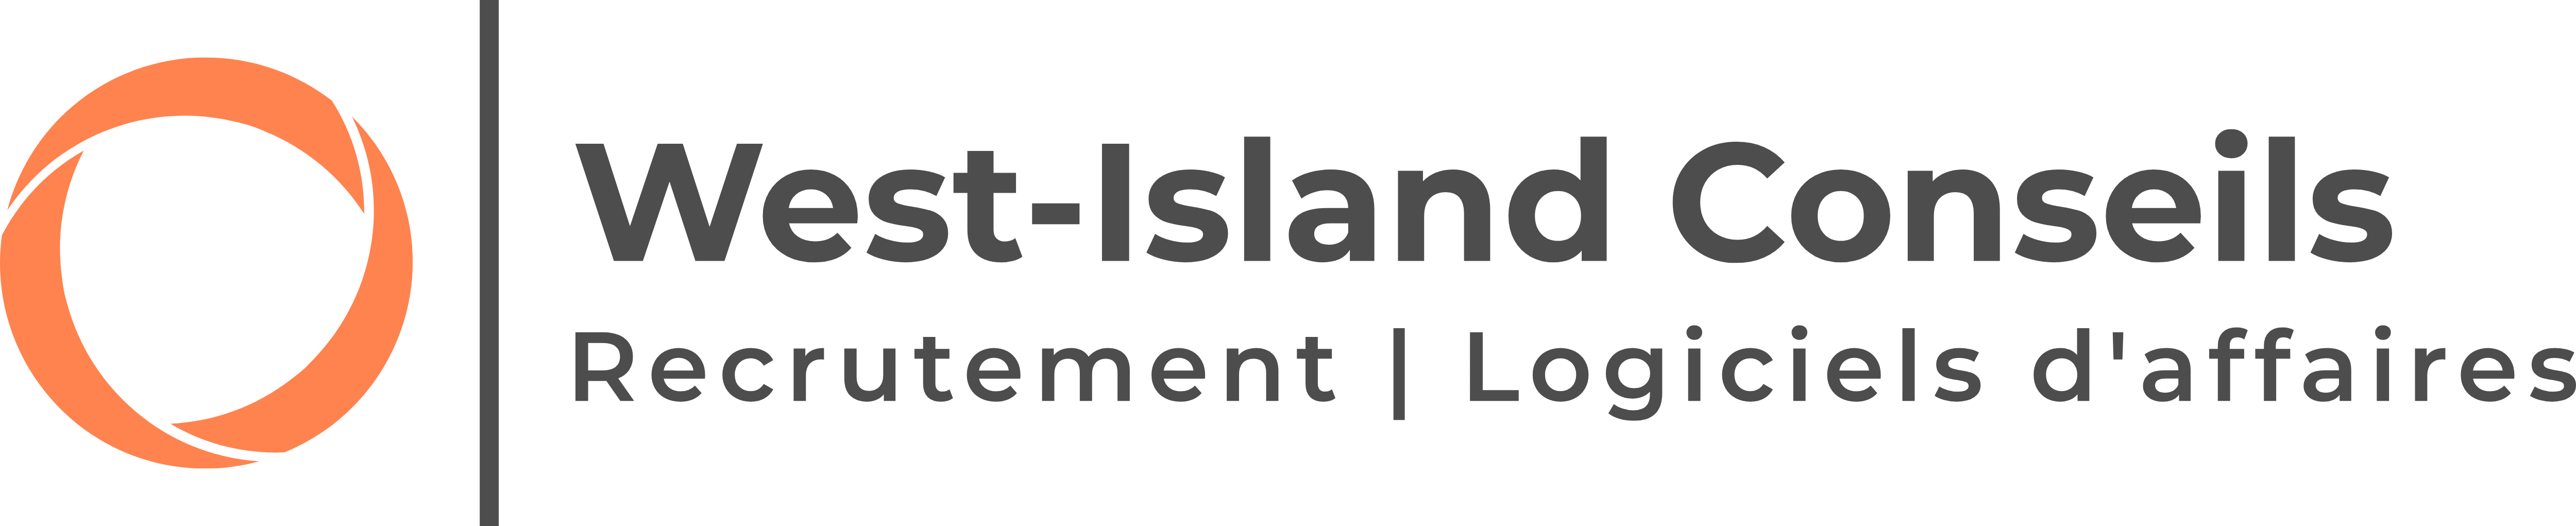 WEST-ISLAND CONSEILS